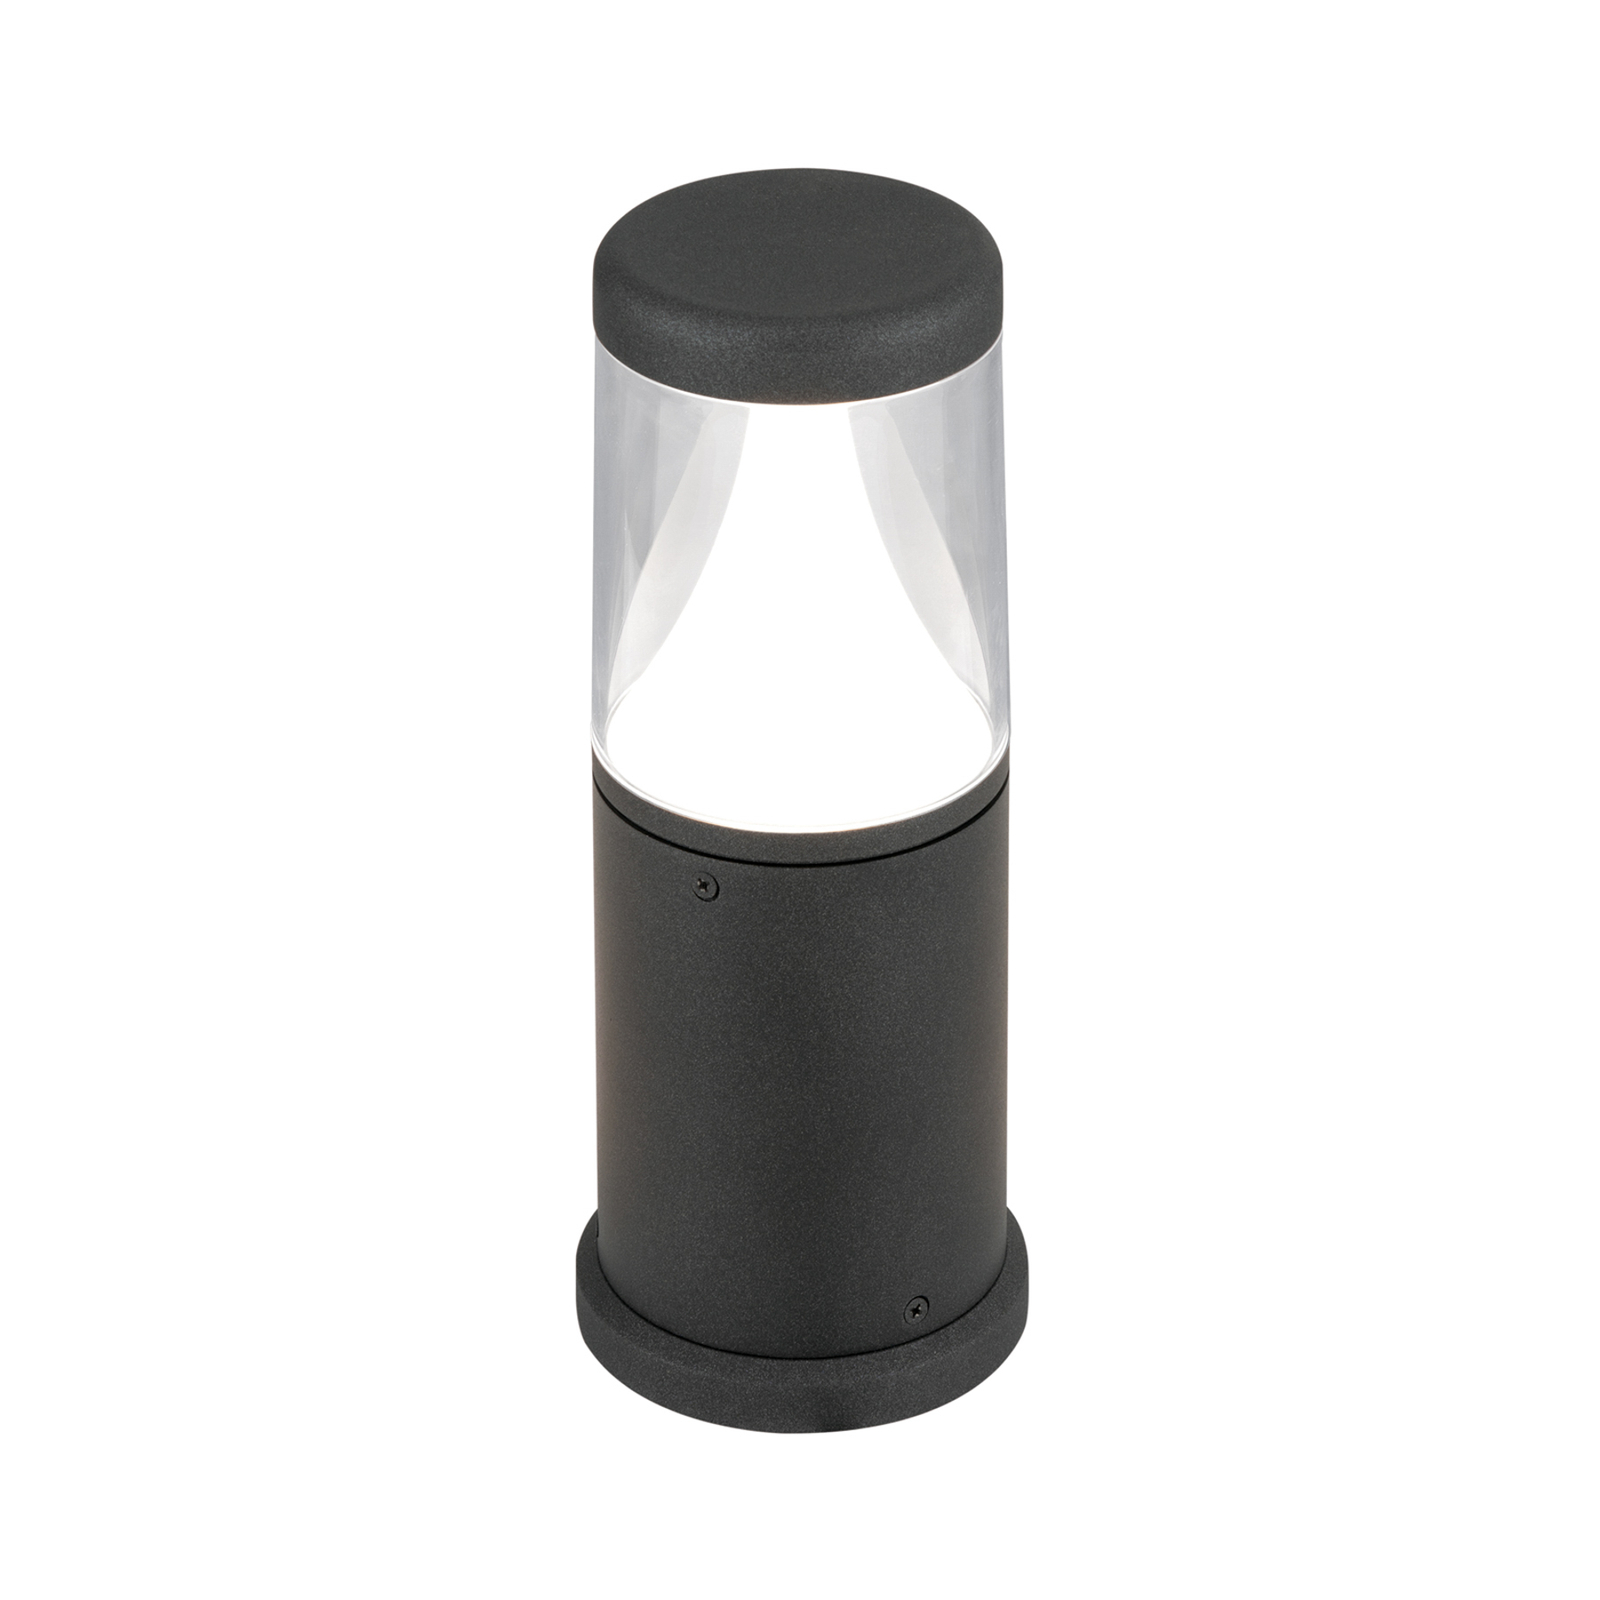 LED soklové světlo Midnight, anti UV difuzor, IP65